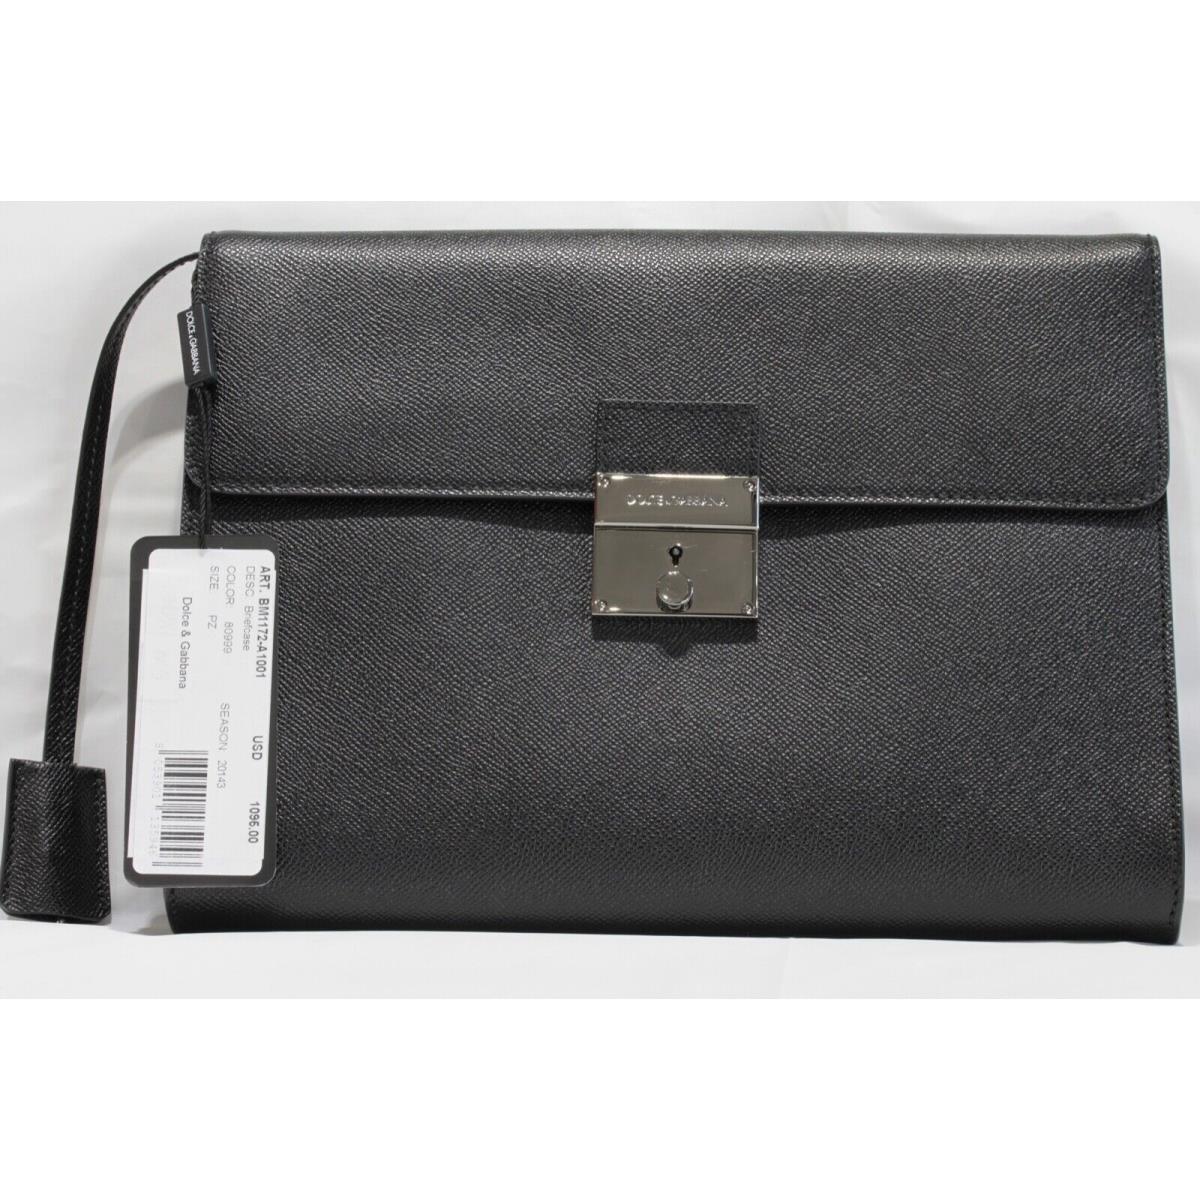 Dolce Gabbana Briefcase BM1172-A1001 Black Textured Leather 80999 Bag